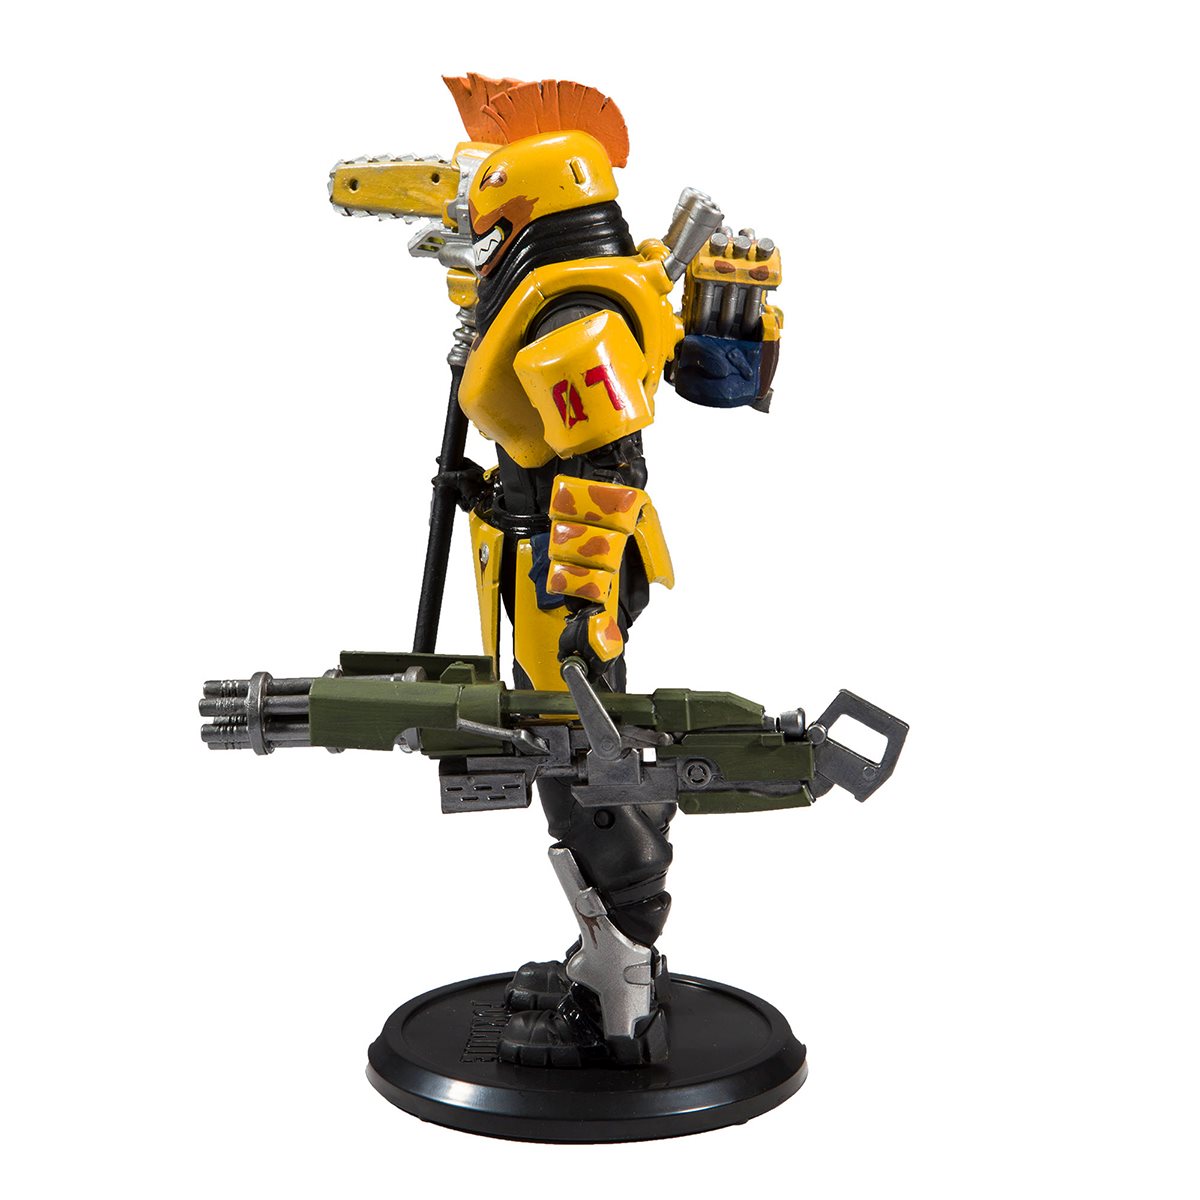 McFarlane Toys Fortnite Beastmode Jackal 7 Inch Action Figure MISB for sale online